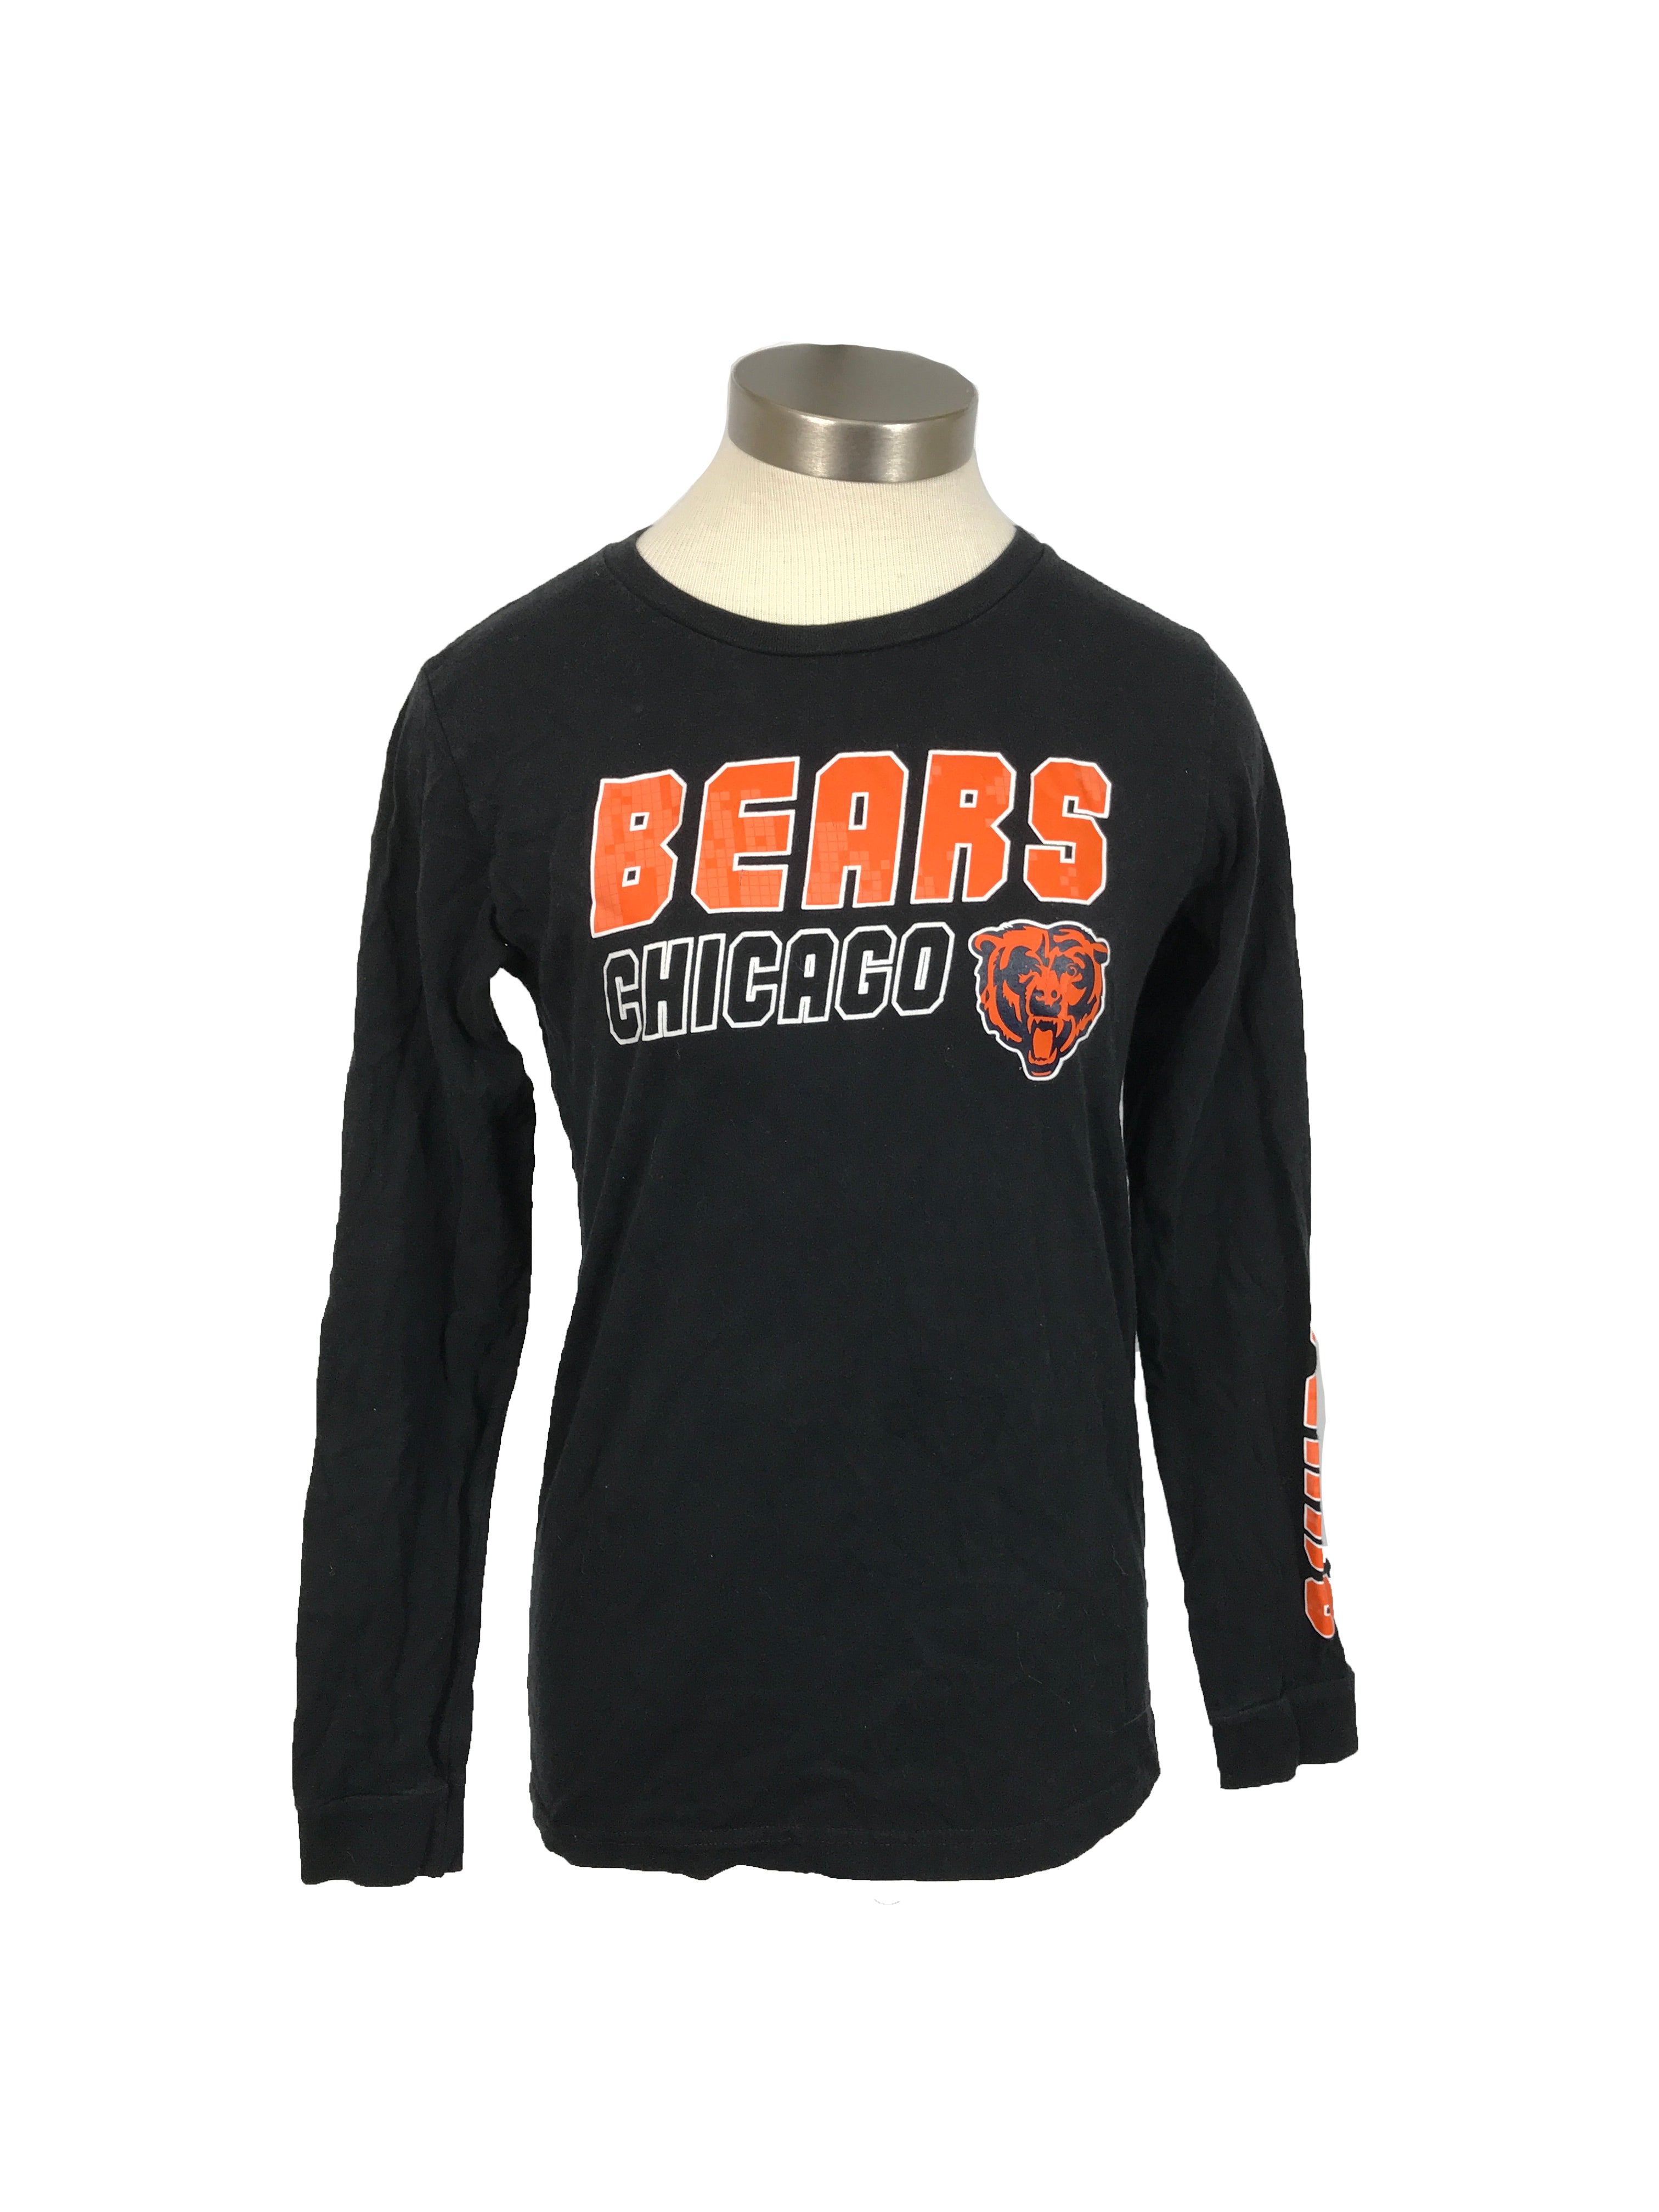 Chicago Bears Black Long Sleeve Shirt Youth X-Large (14-16)